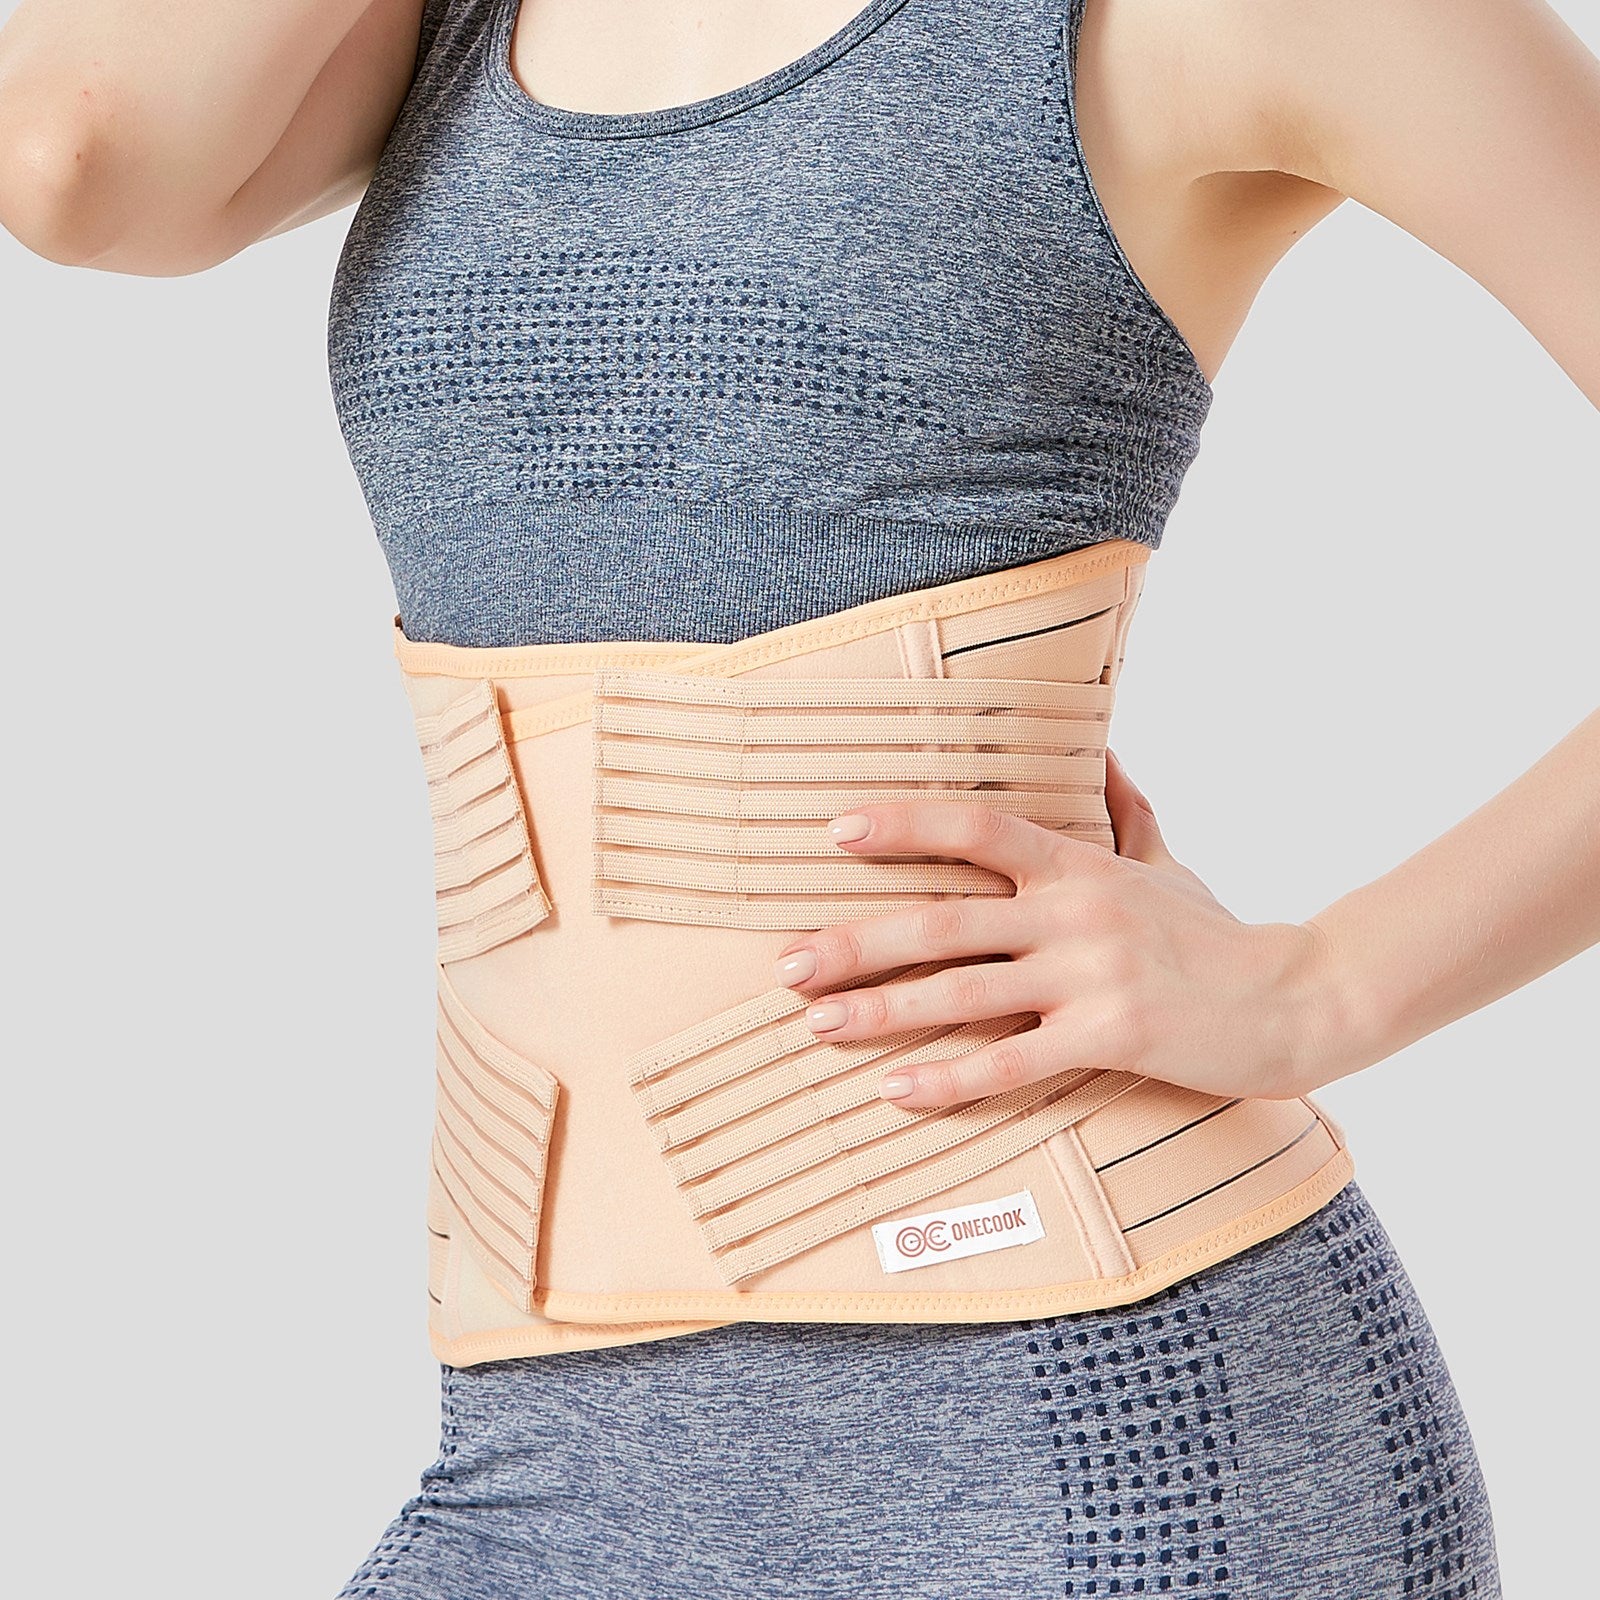 Women Belly Wrap Band Body Shaper Postpartum Belt Support HOT